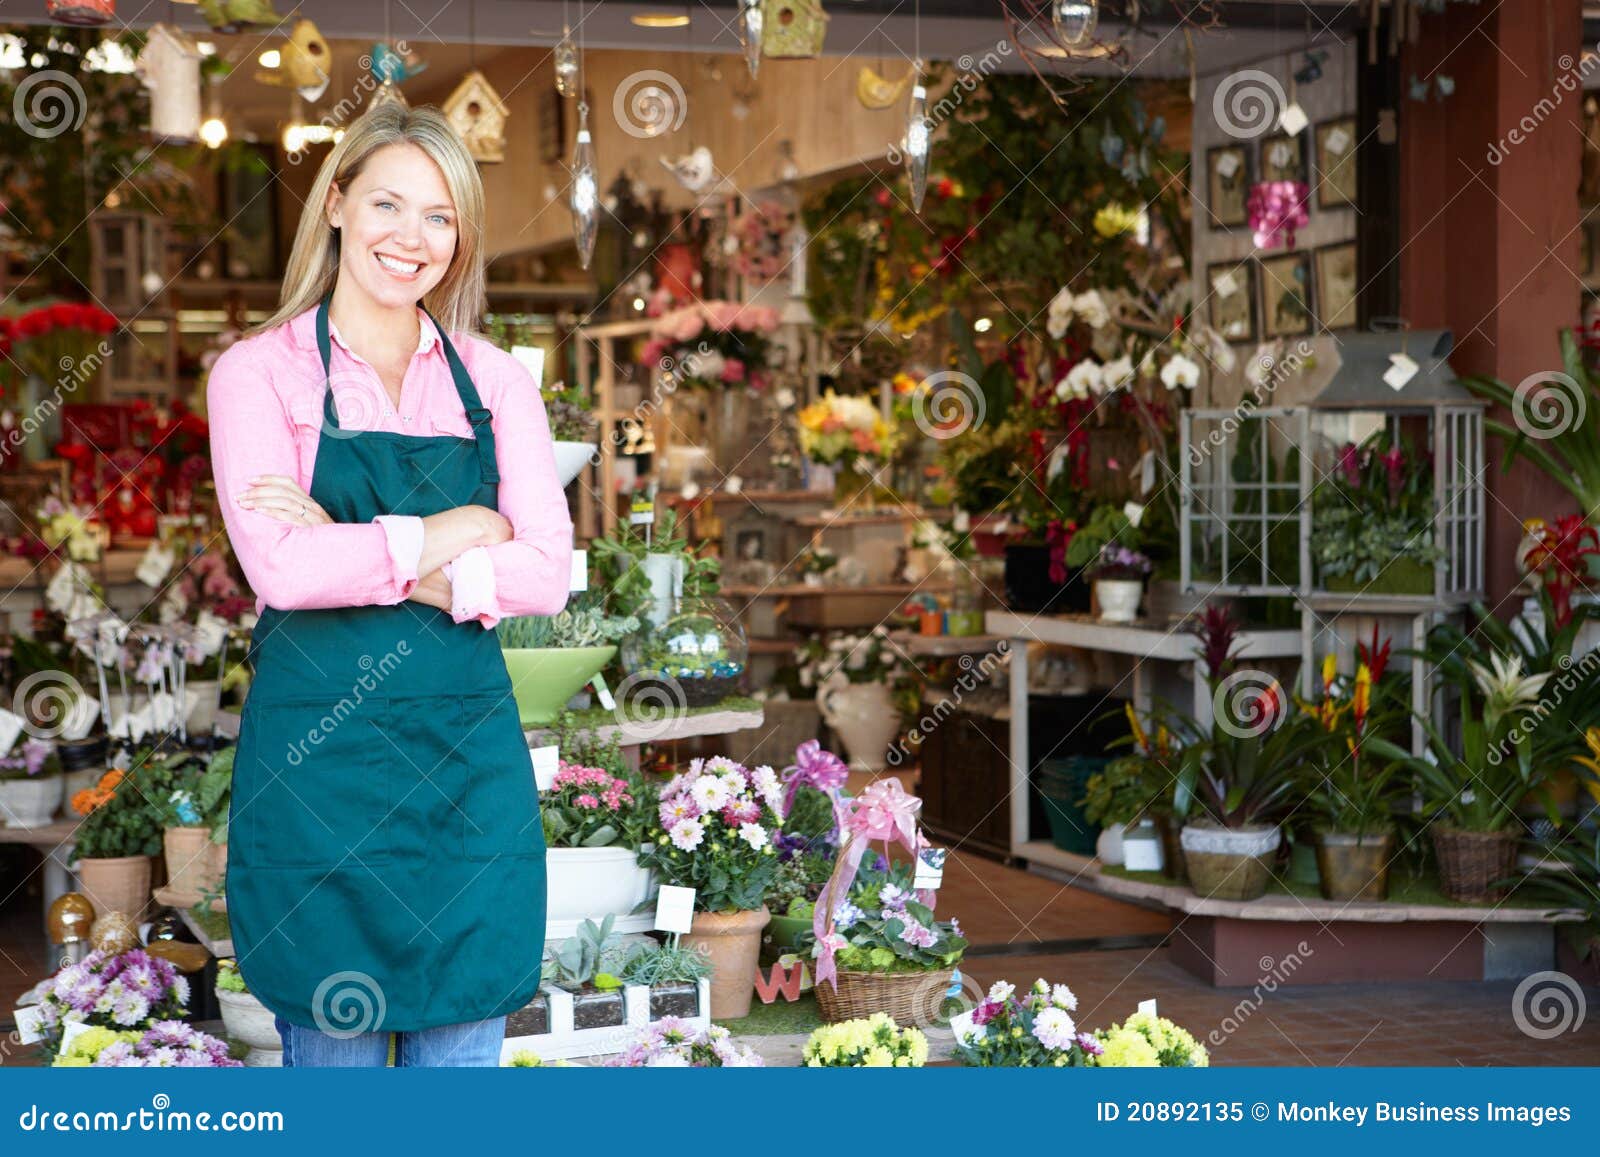 woman florist standing outside shop